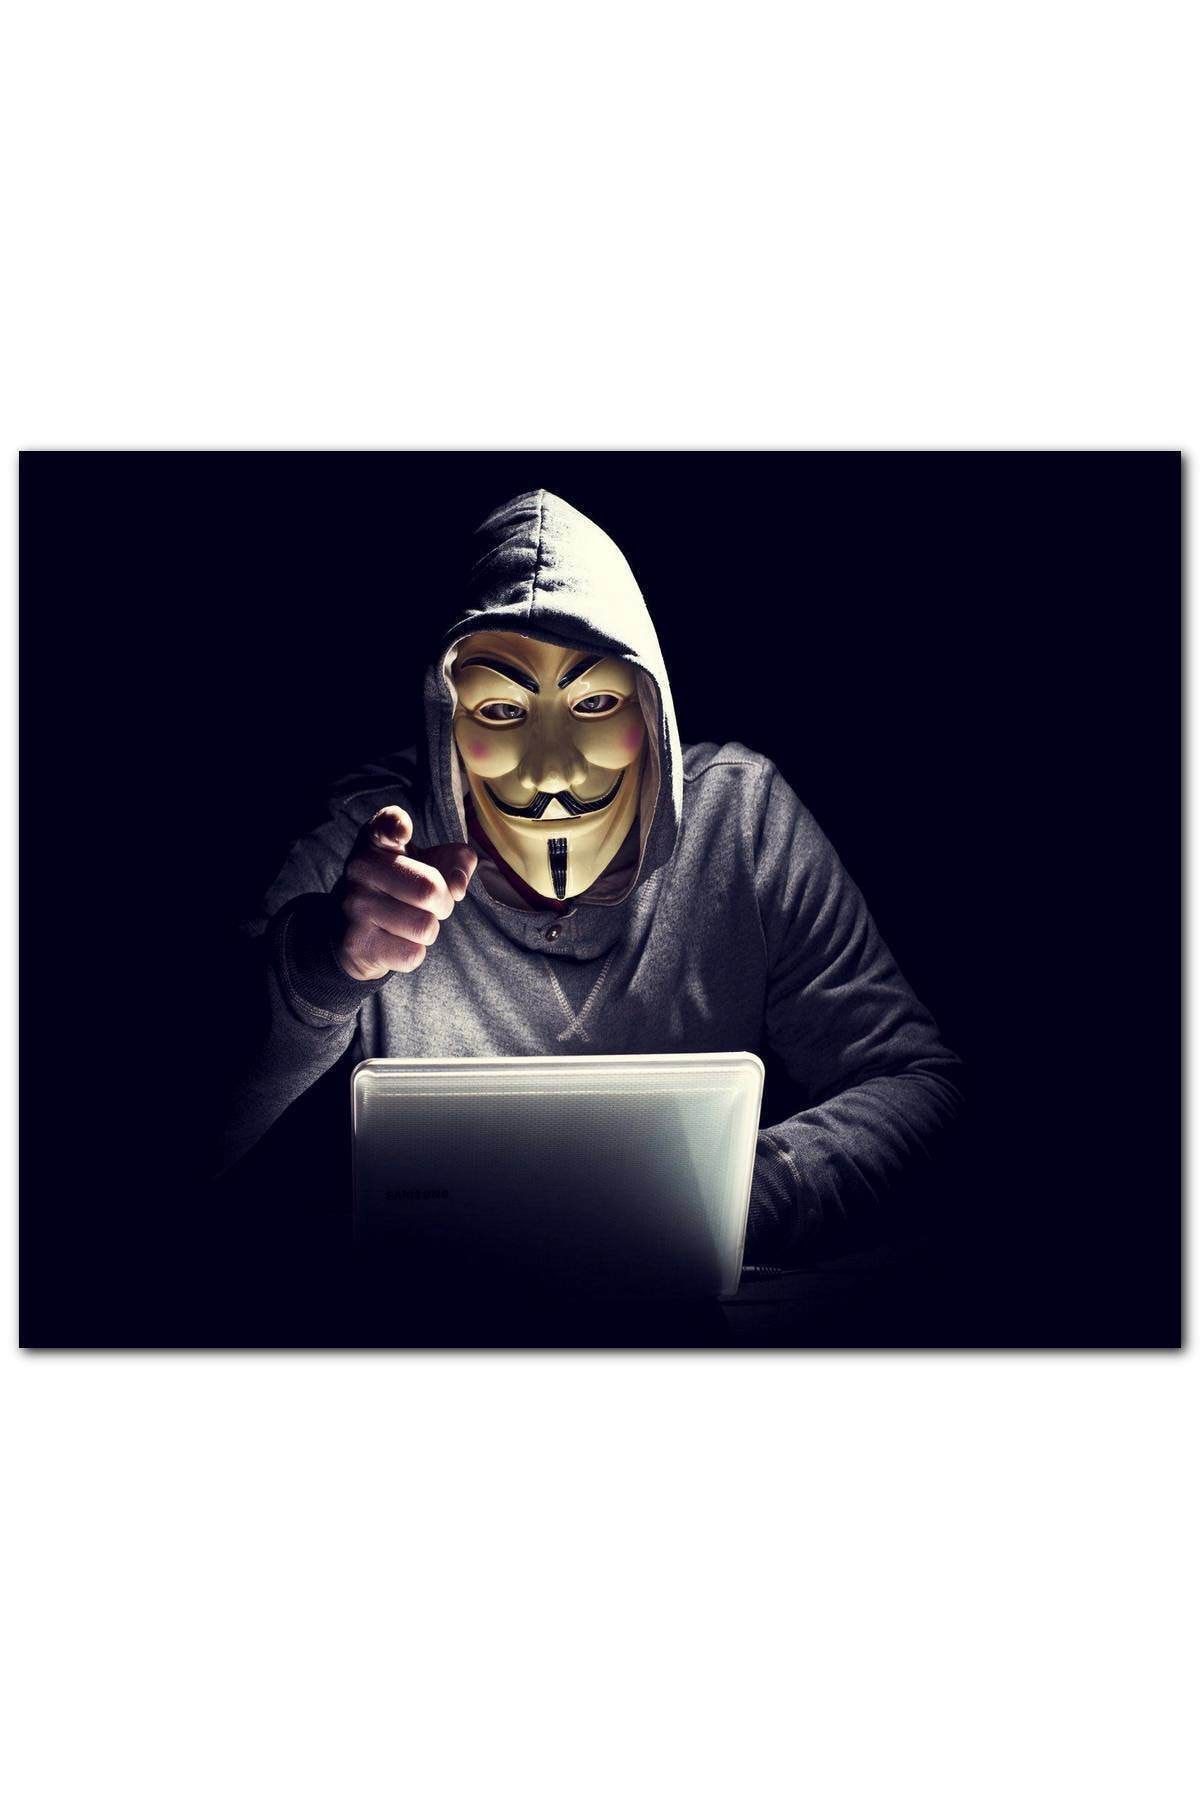 Cakatablo Ahşap Tablo Hacker Anonymous Maskeli (25x35 Cm Boyut)